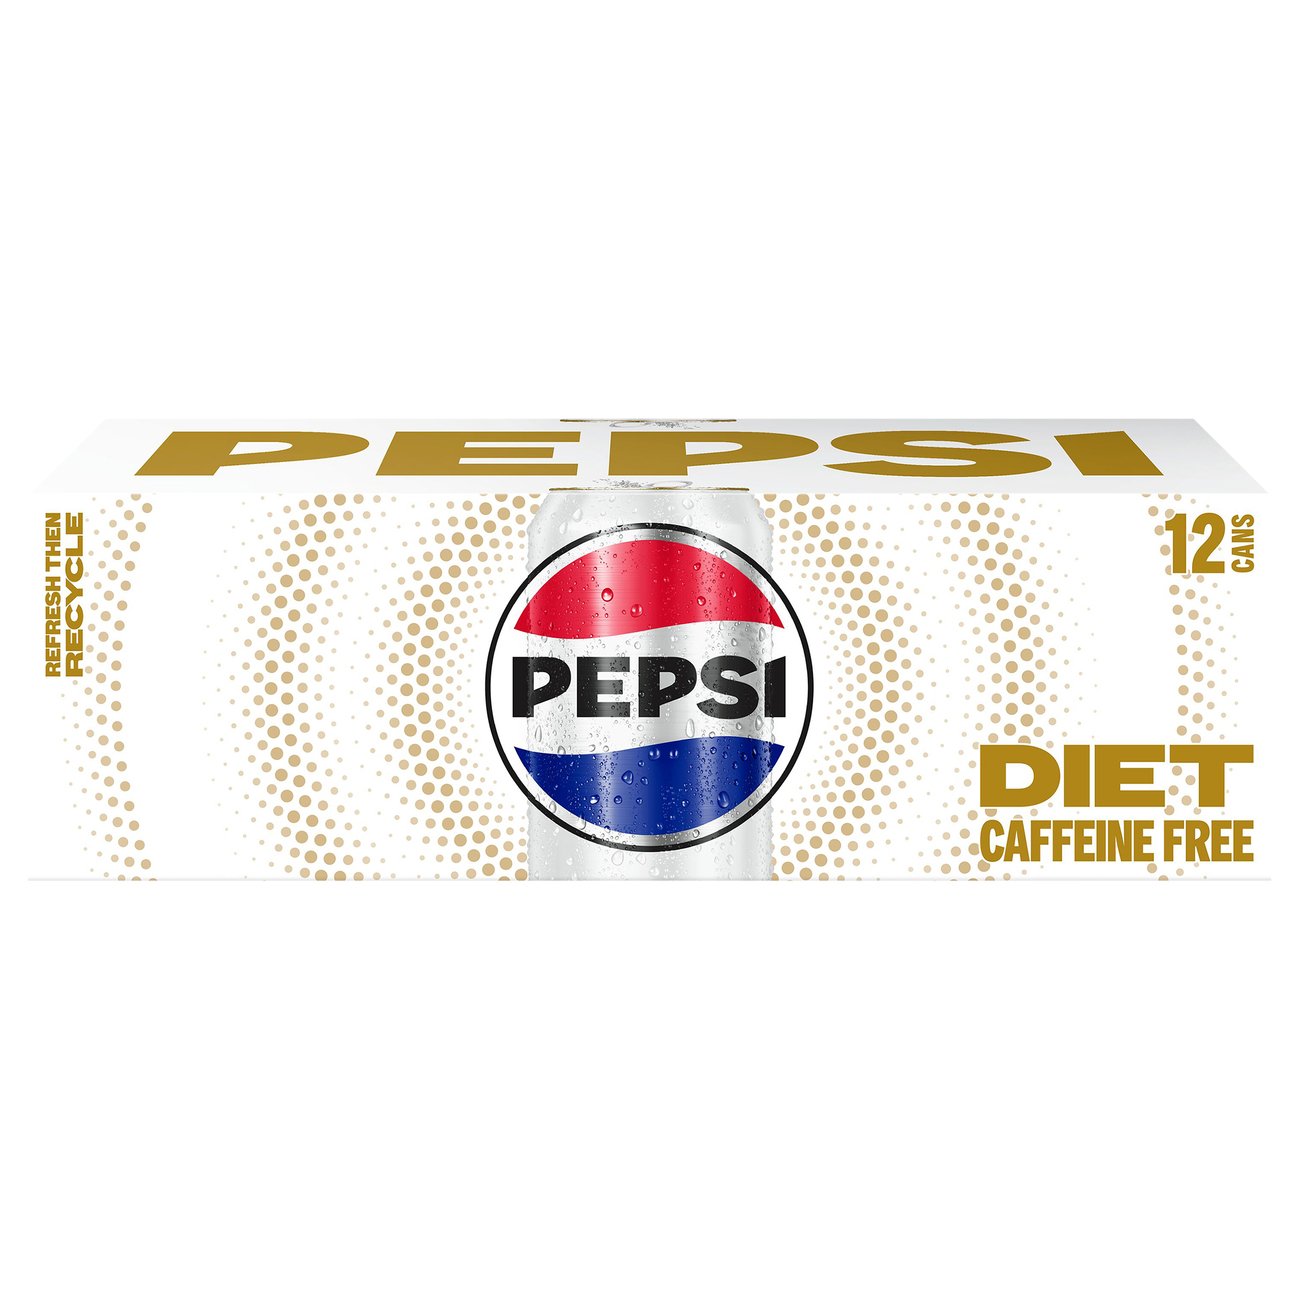 Pepsi Nutrition Facts Caffeine | Blog Dandk